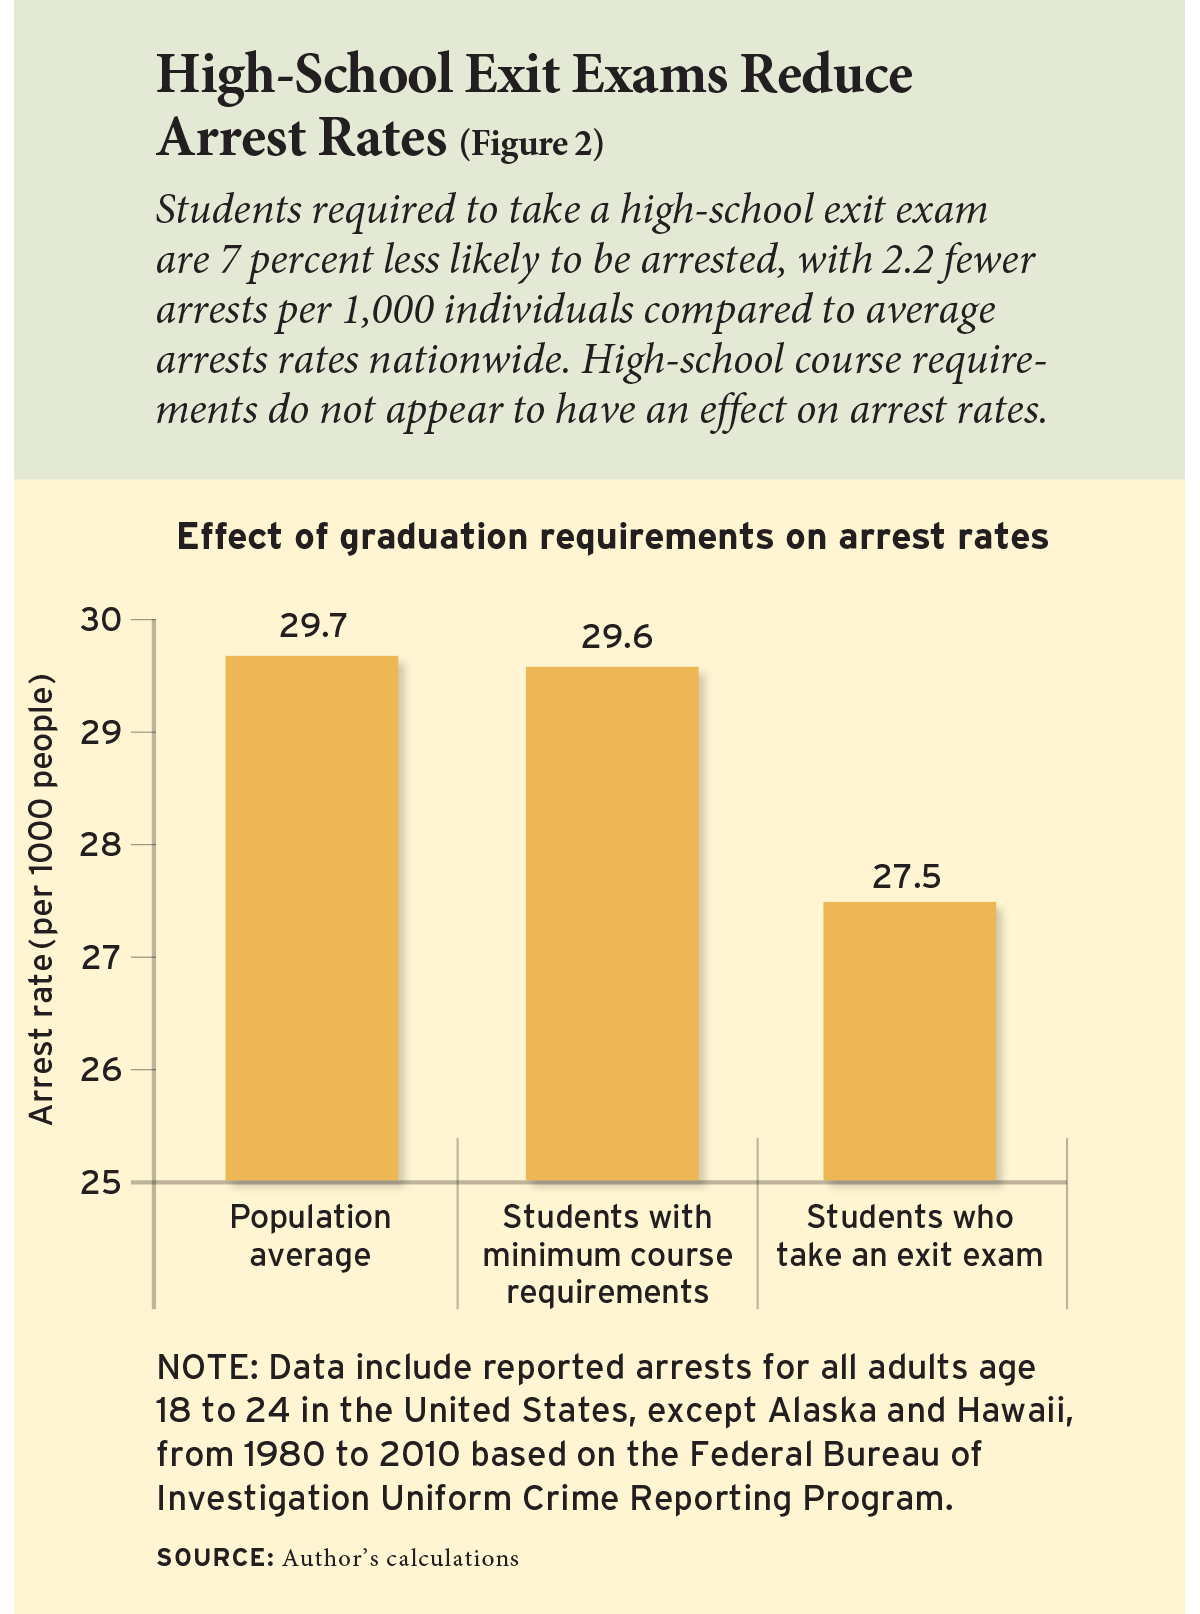 High-School Exit Exams Reduce Arrest Rates (Figure 2)